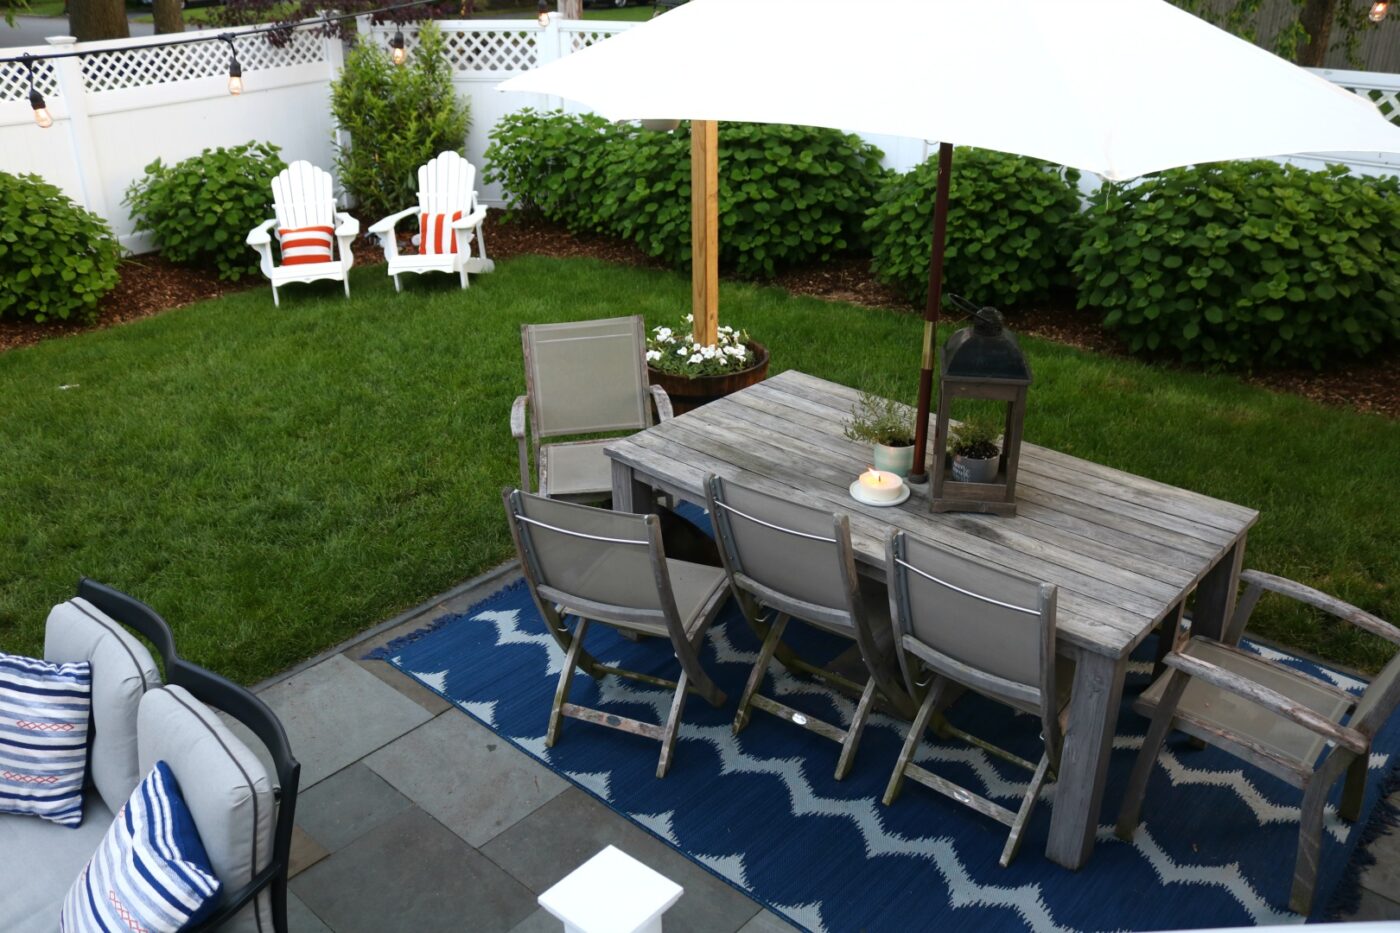 patio furniture ideas for smaller backyard spaces